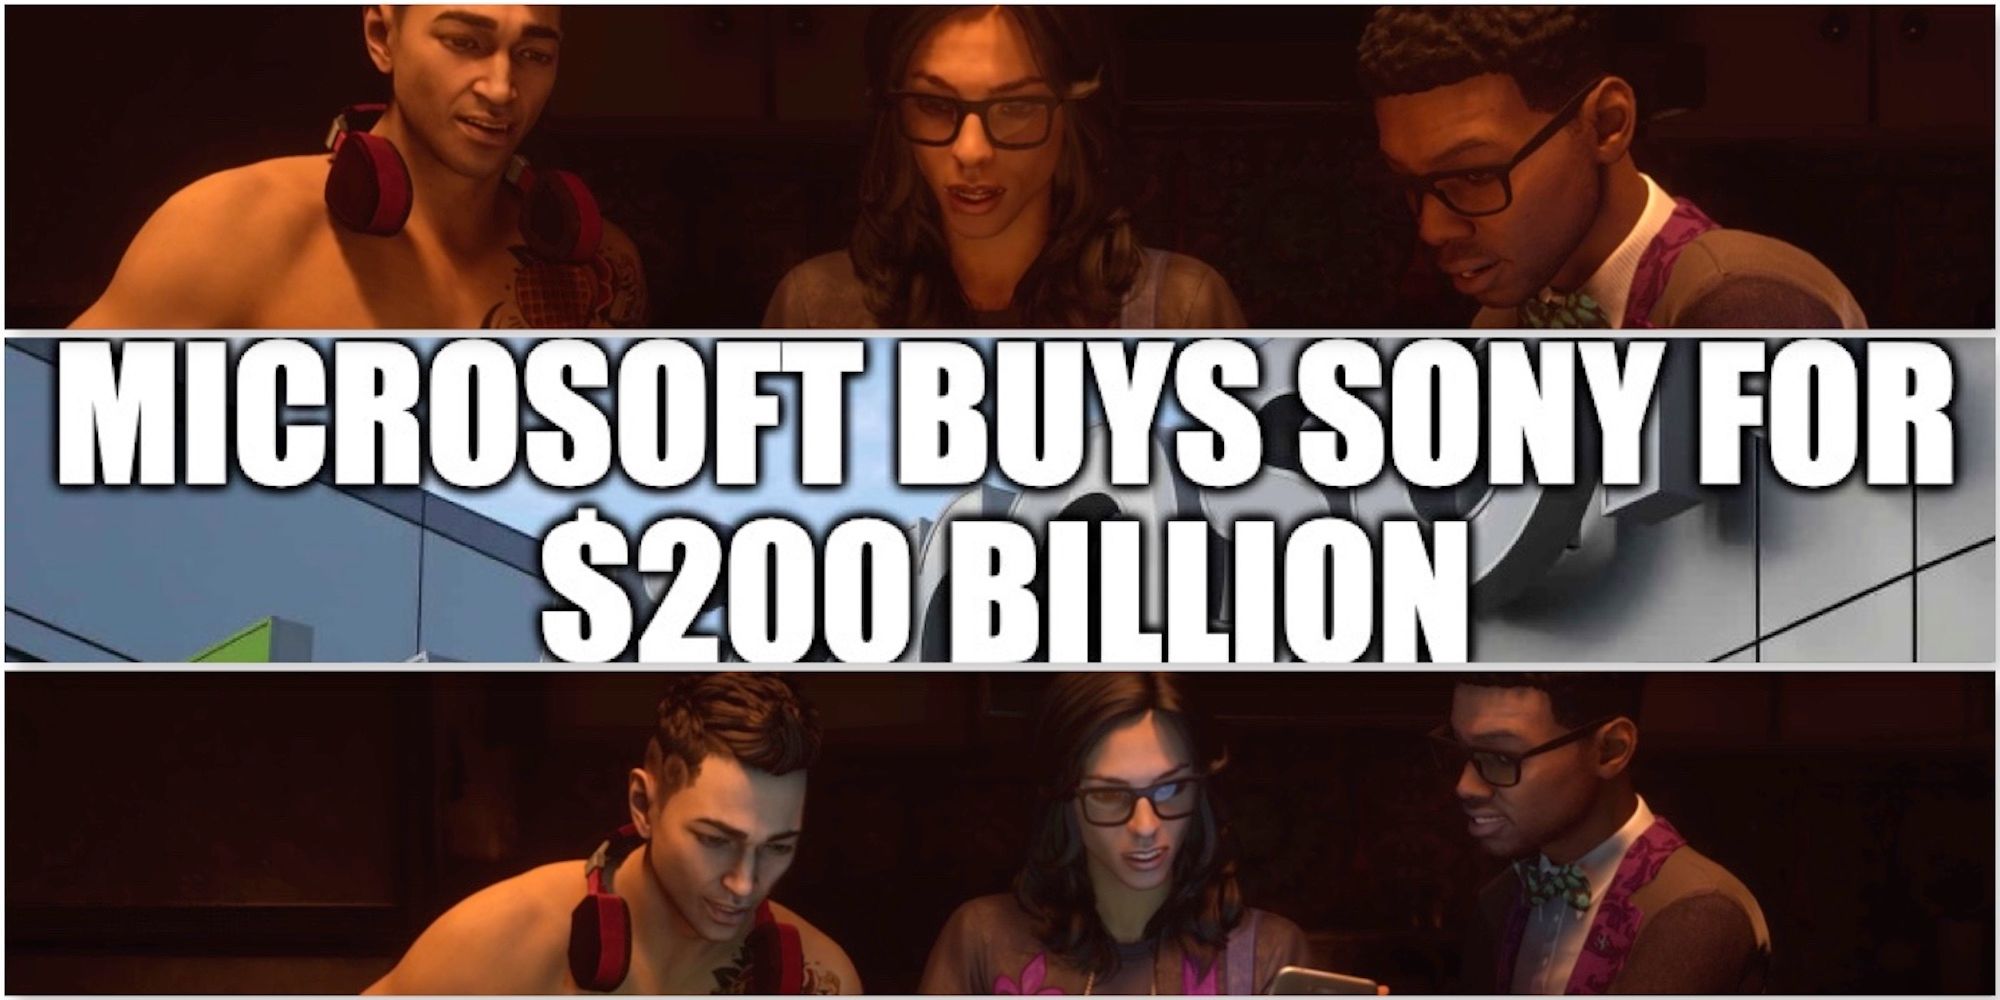 A Saints Row Meme involving Microsoft and Sony